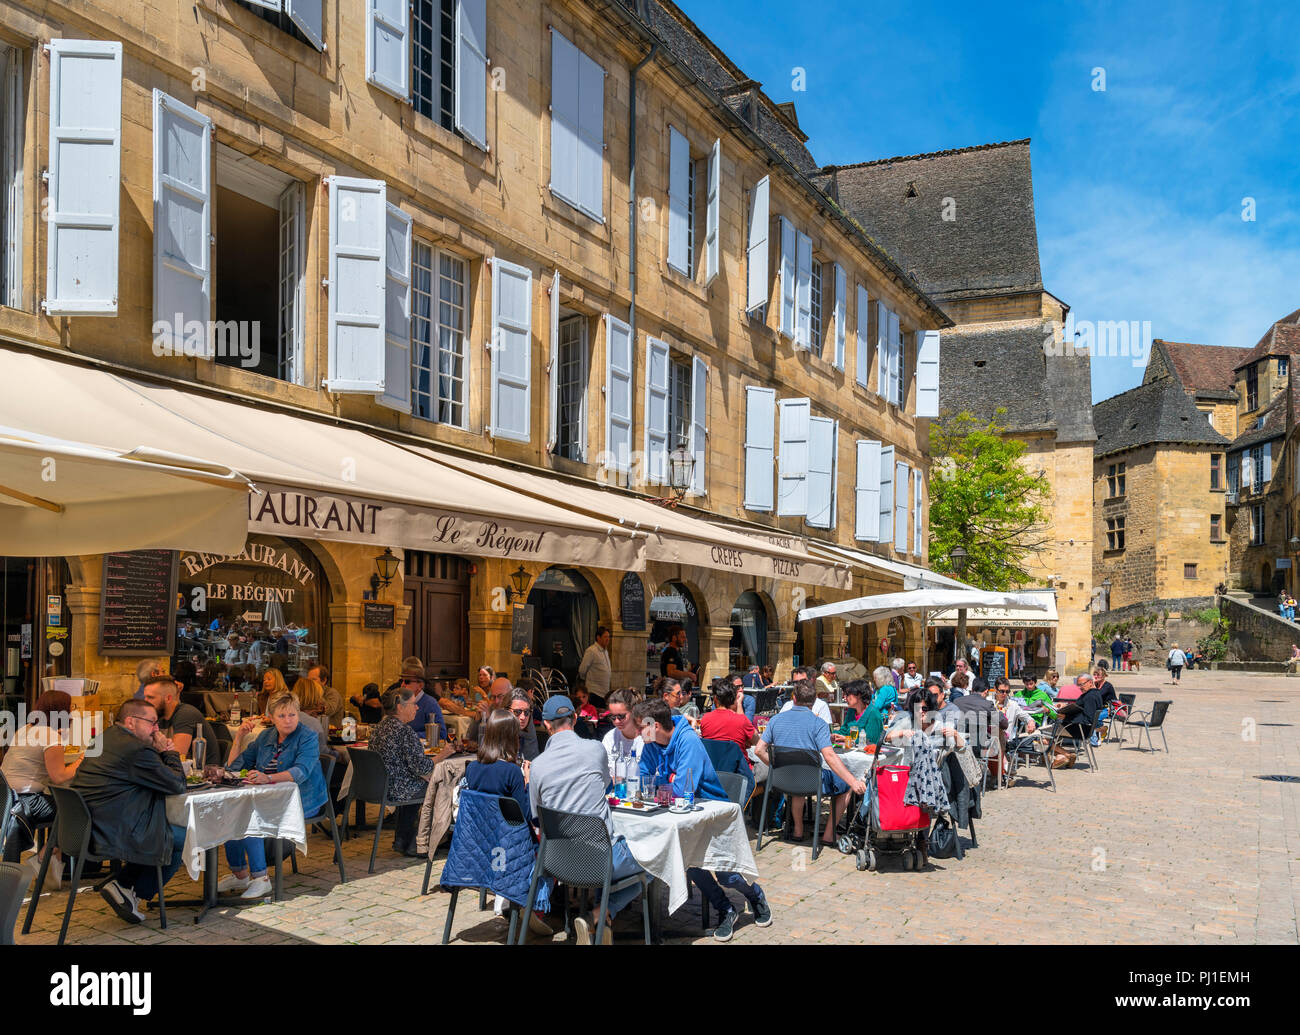 Restaurant Le Regent auf dem Place de la Liberte in der Altstadt, Sarlat, Dordogne, Frankreich Stockfoto